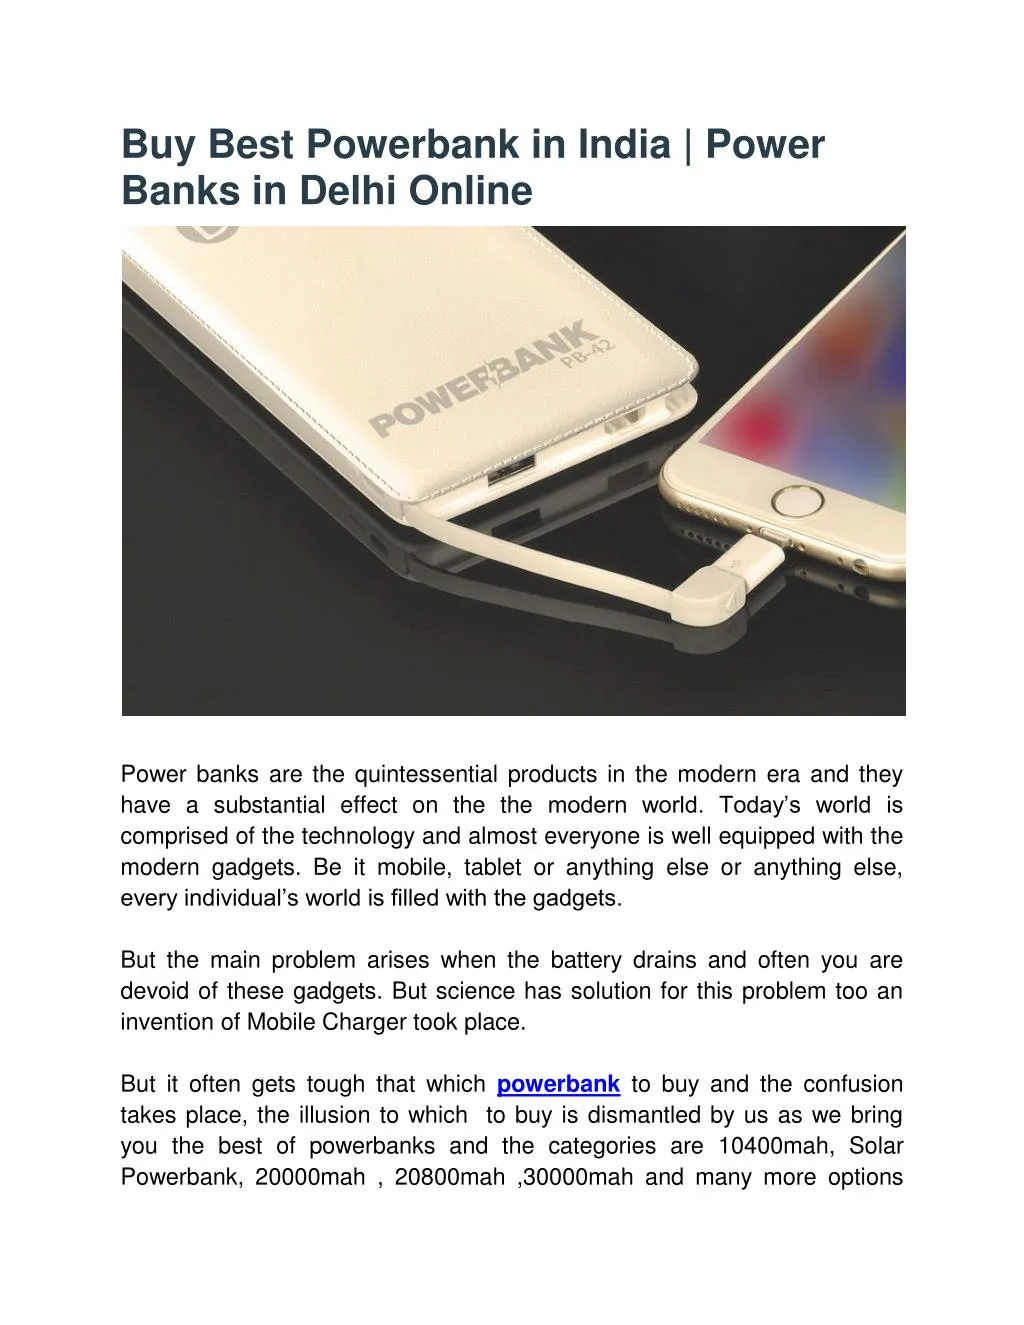 buy best powerbank in india power banks in delhi